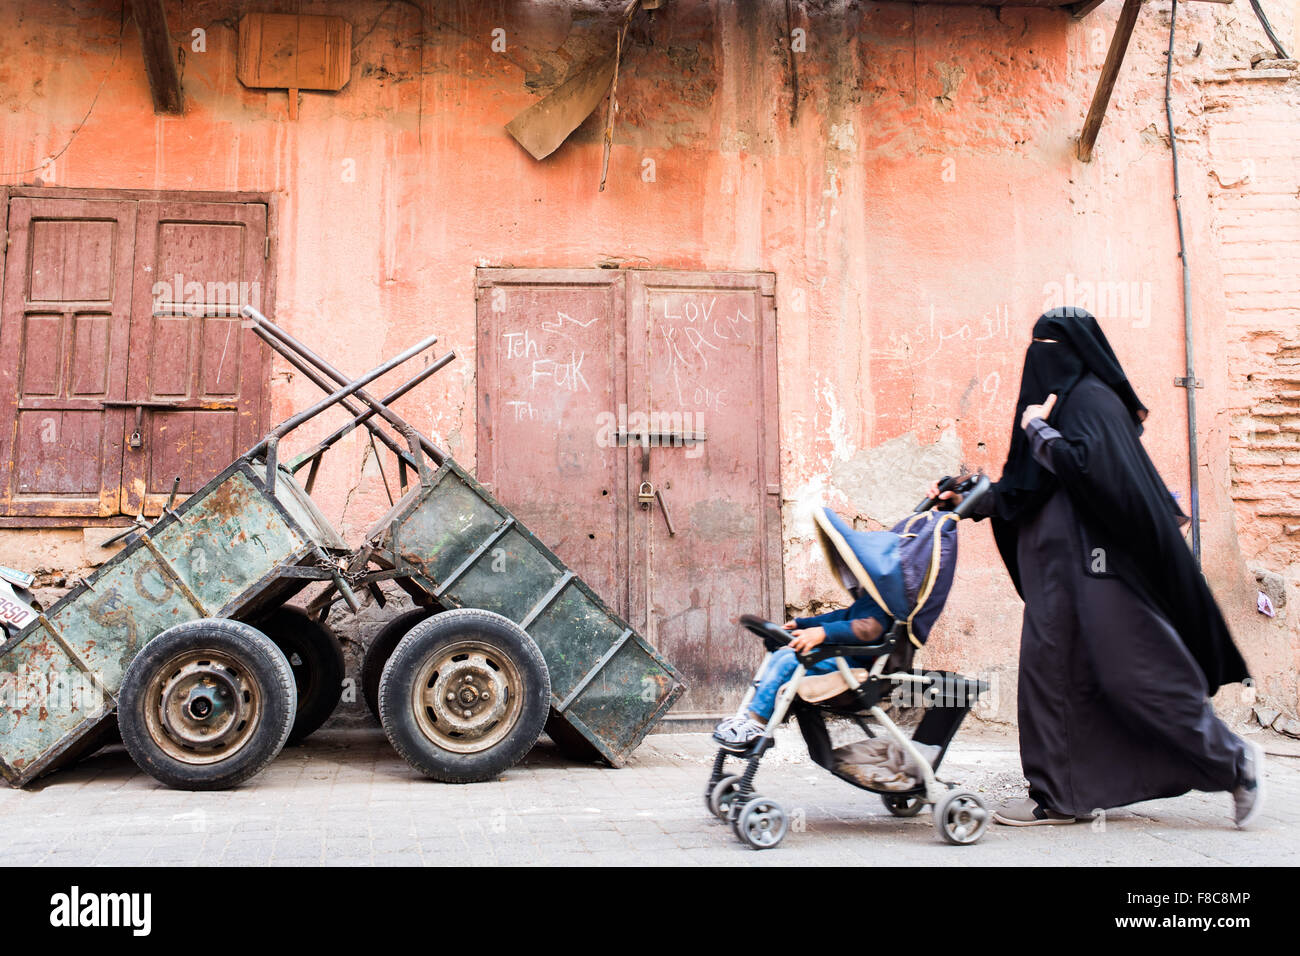 Street photography. Muslim woman wearing a black burqa pushing a push chair past some rusty carts Stock Photo